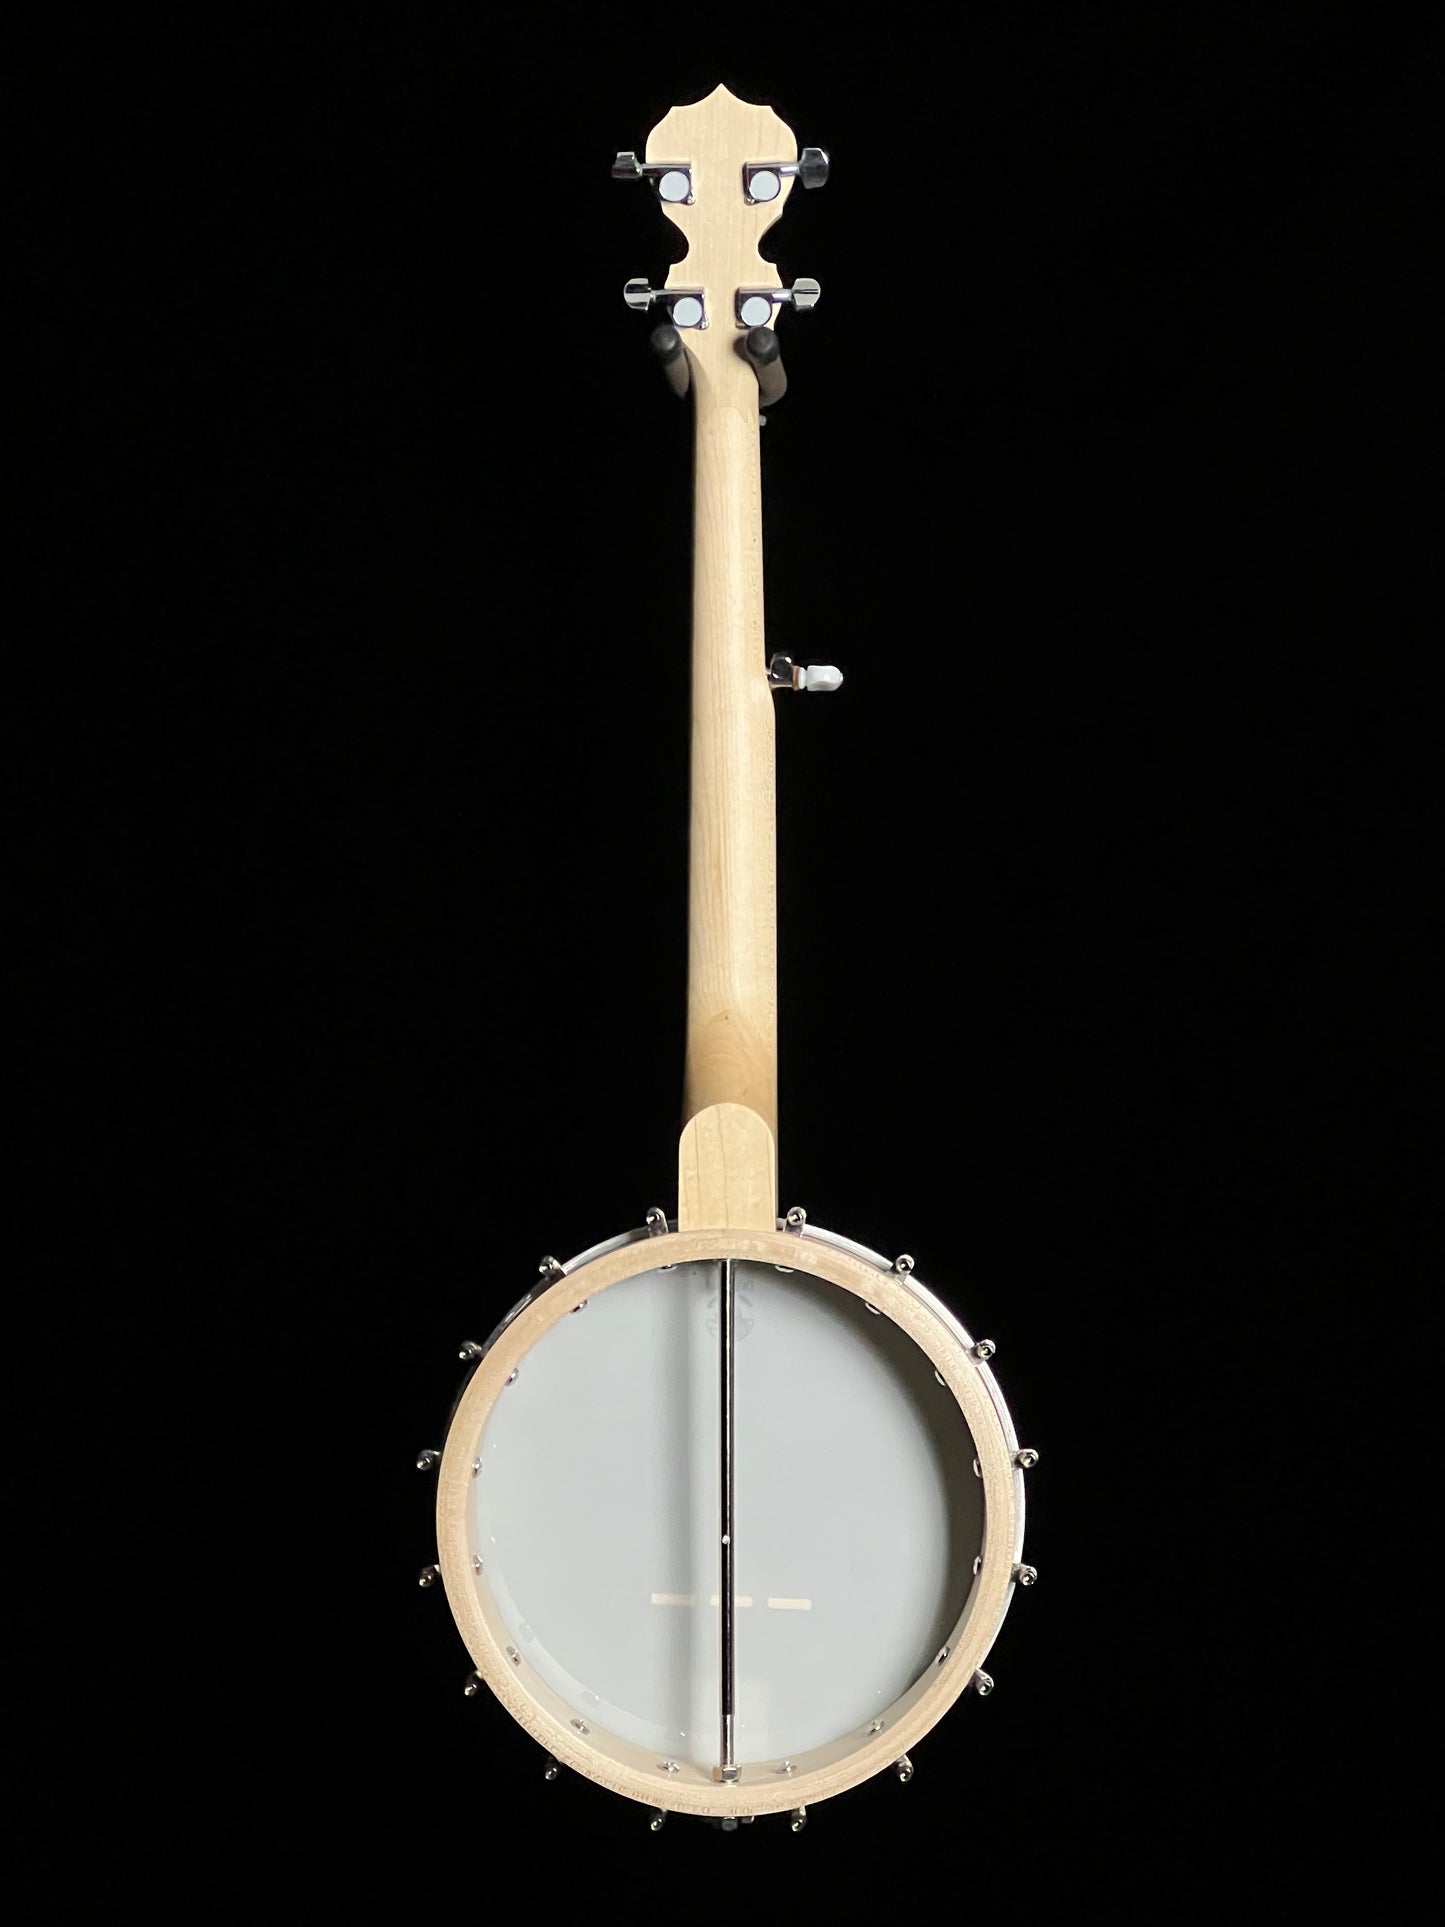 Deering Goodtime Jr. Open-back 5-String Banjo (Silver) - New